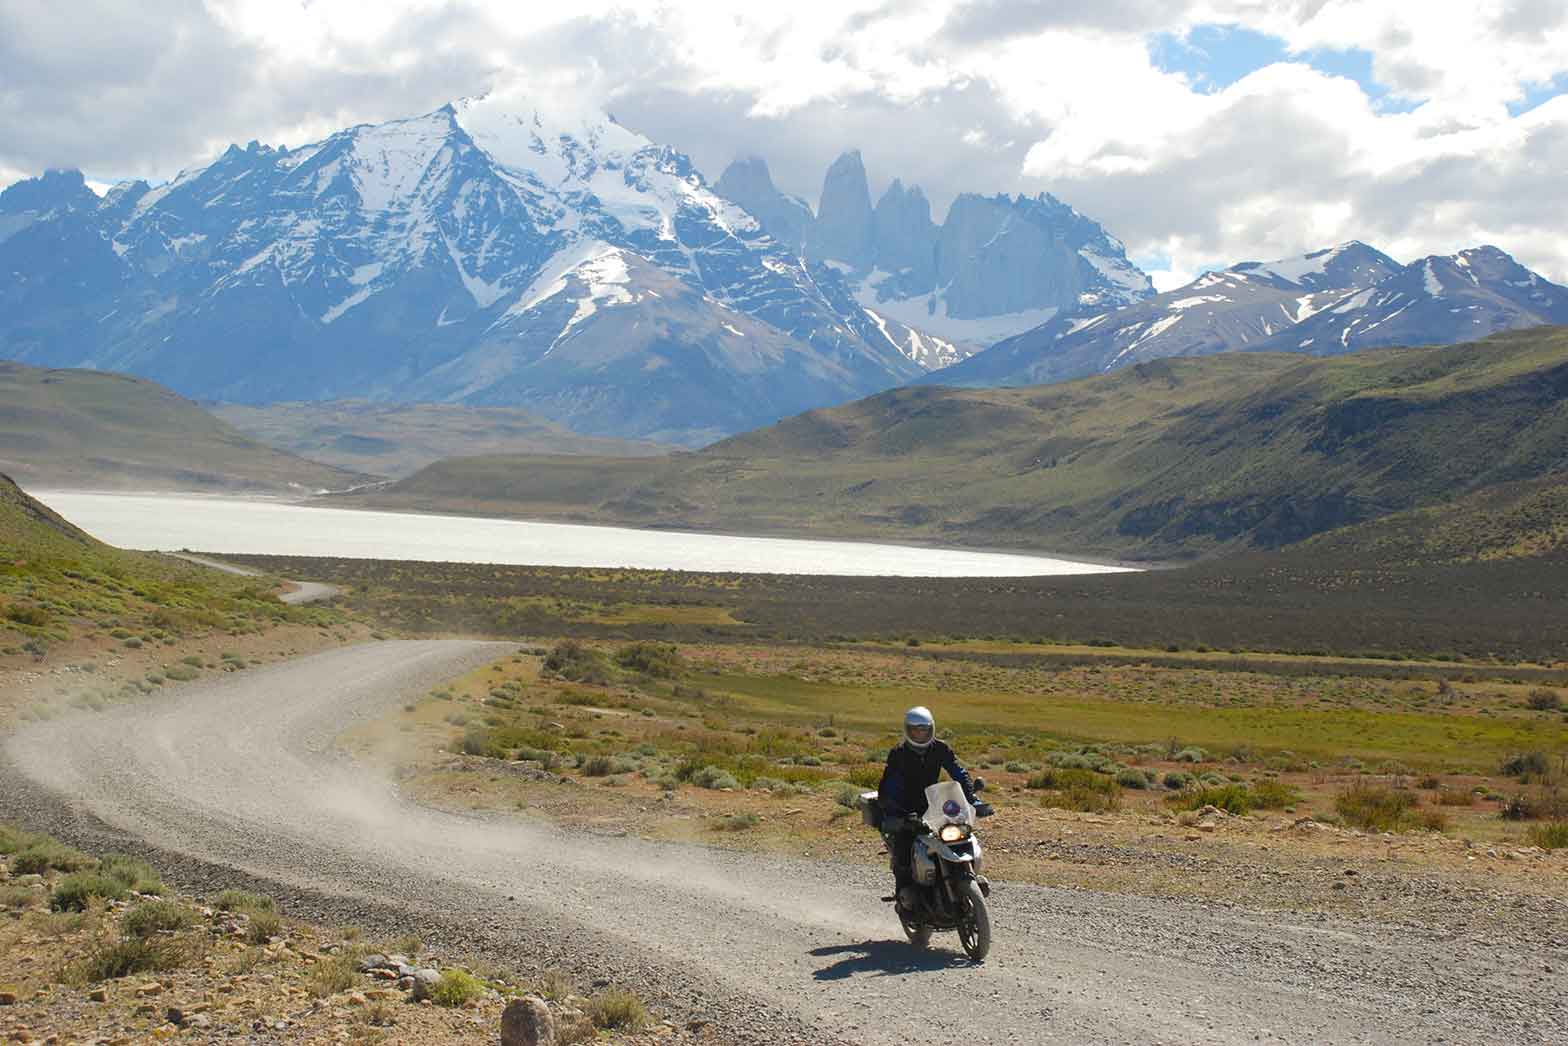 Patagonian scenery